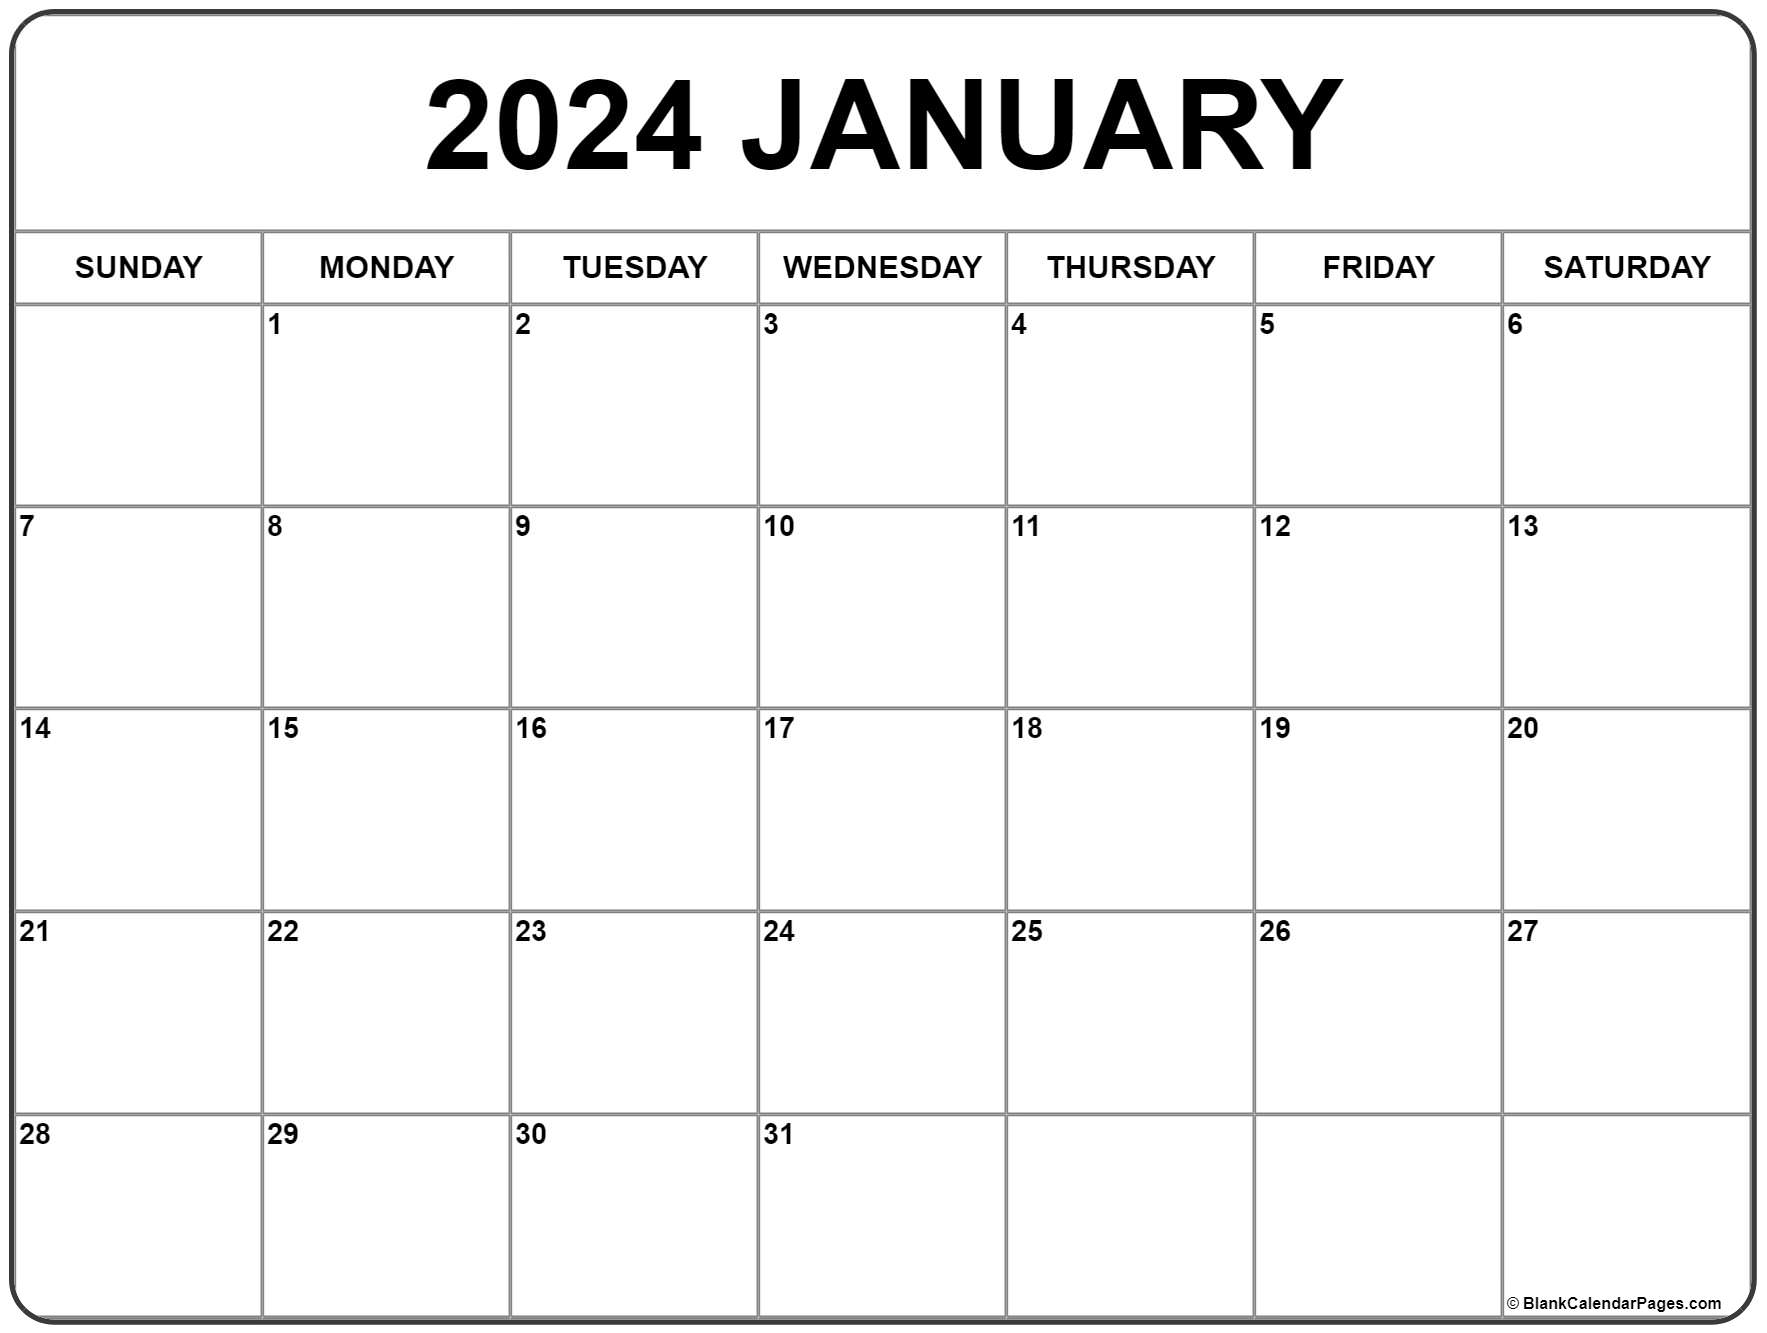 Free January 2021 Calendar January 2021 calendar | free printable monthly calendars